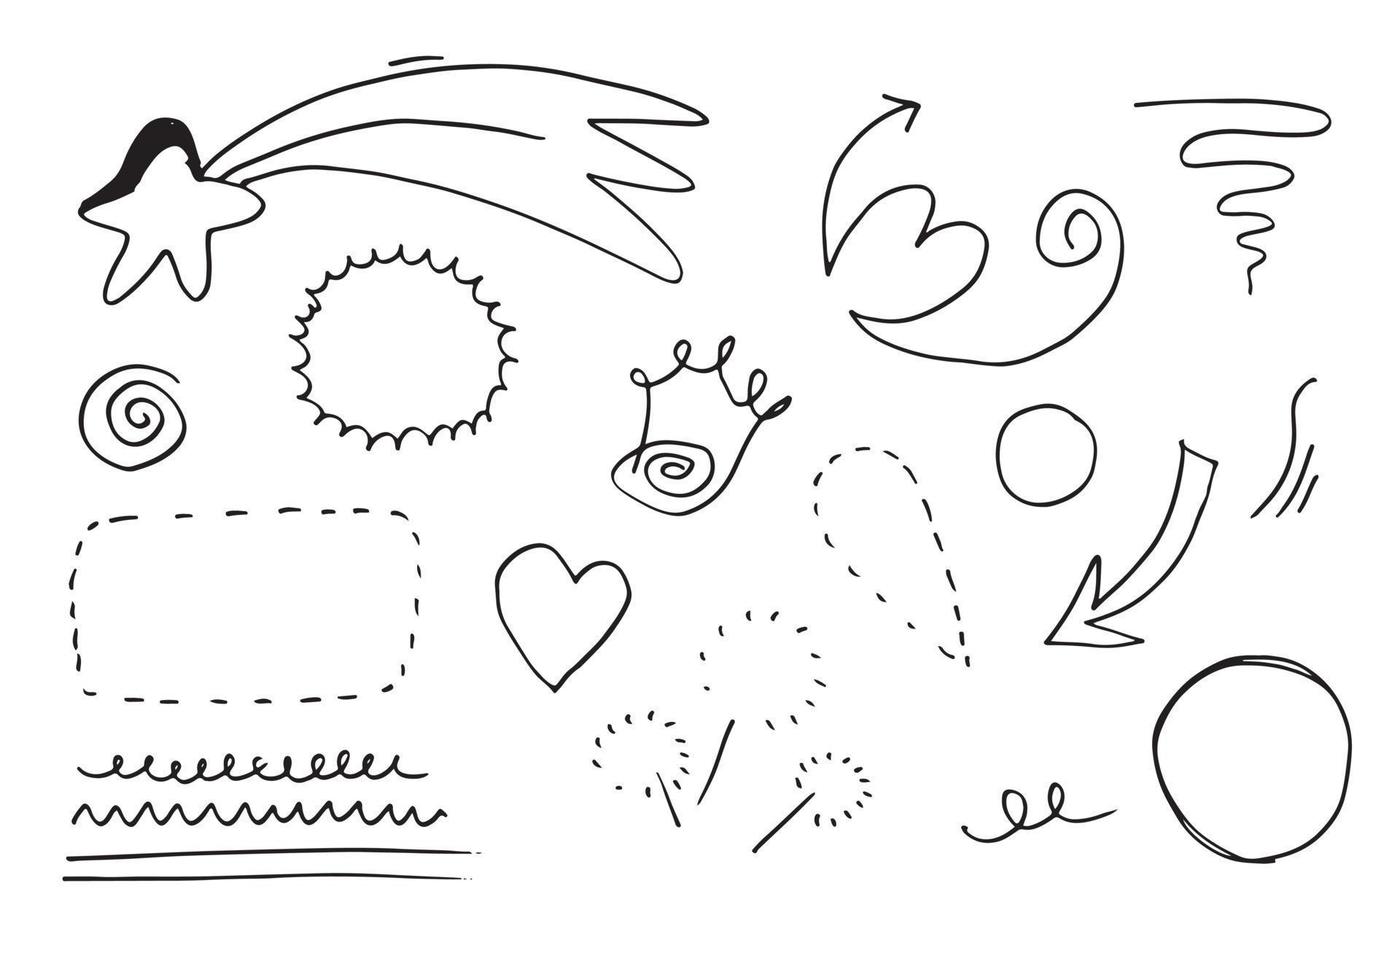 Hand drawn doodle design elements, black on white background. doodle sketch design elements vector